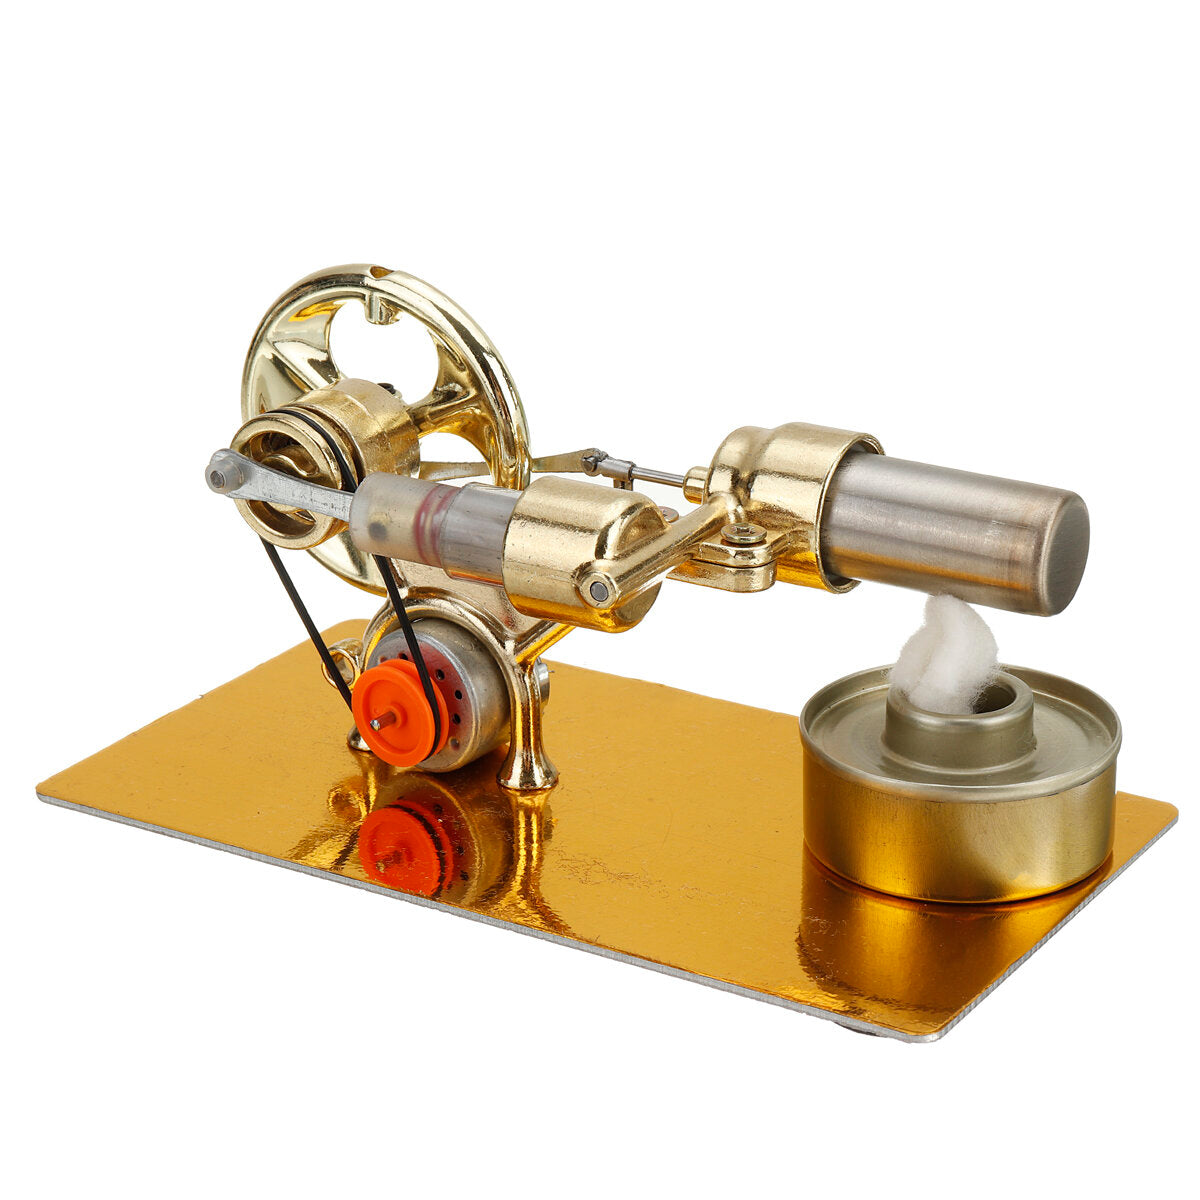 1 stuks 16 x 8.5 x 11 cm physical science dhz kits stirling engine model met onderdelen